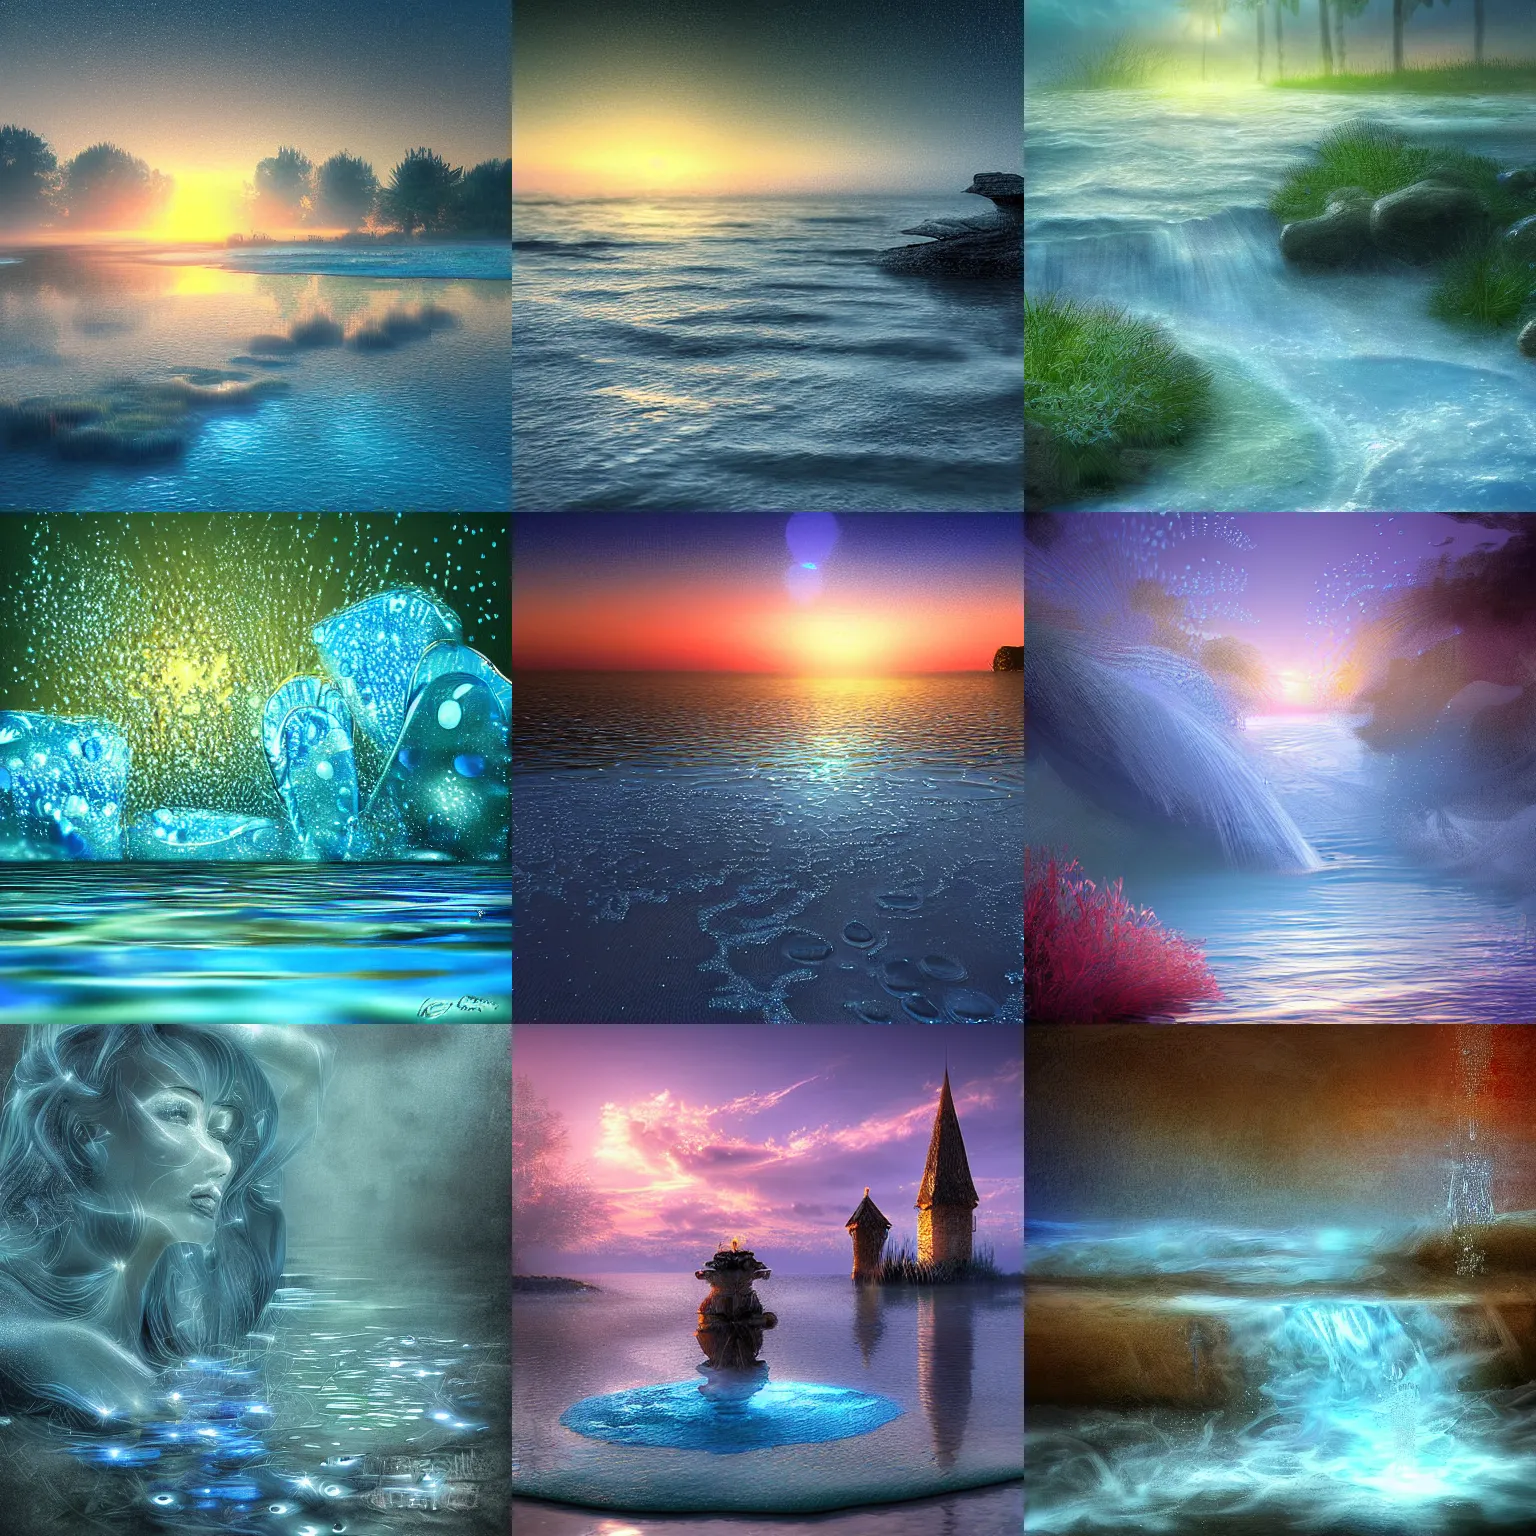 Prompt: closeup fantasy with water magic, at gentle dawn blue light, digital art